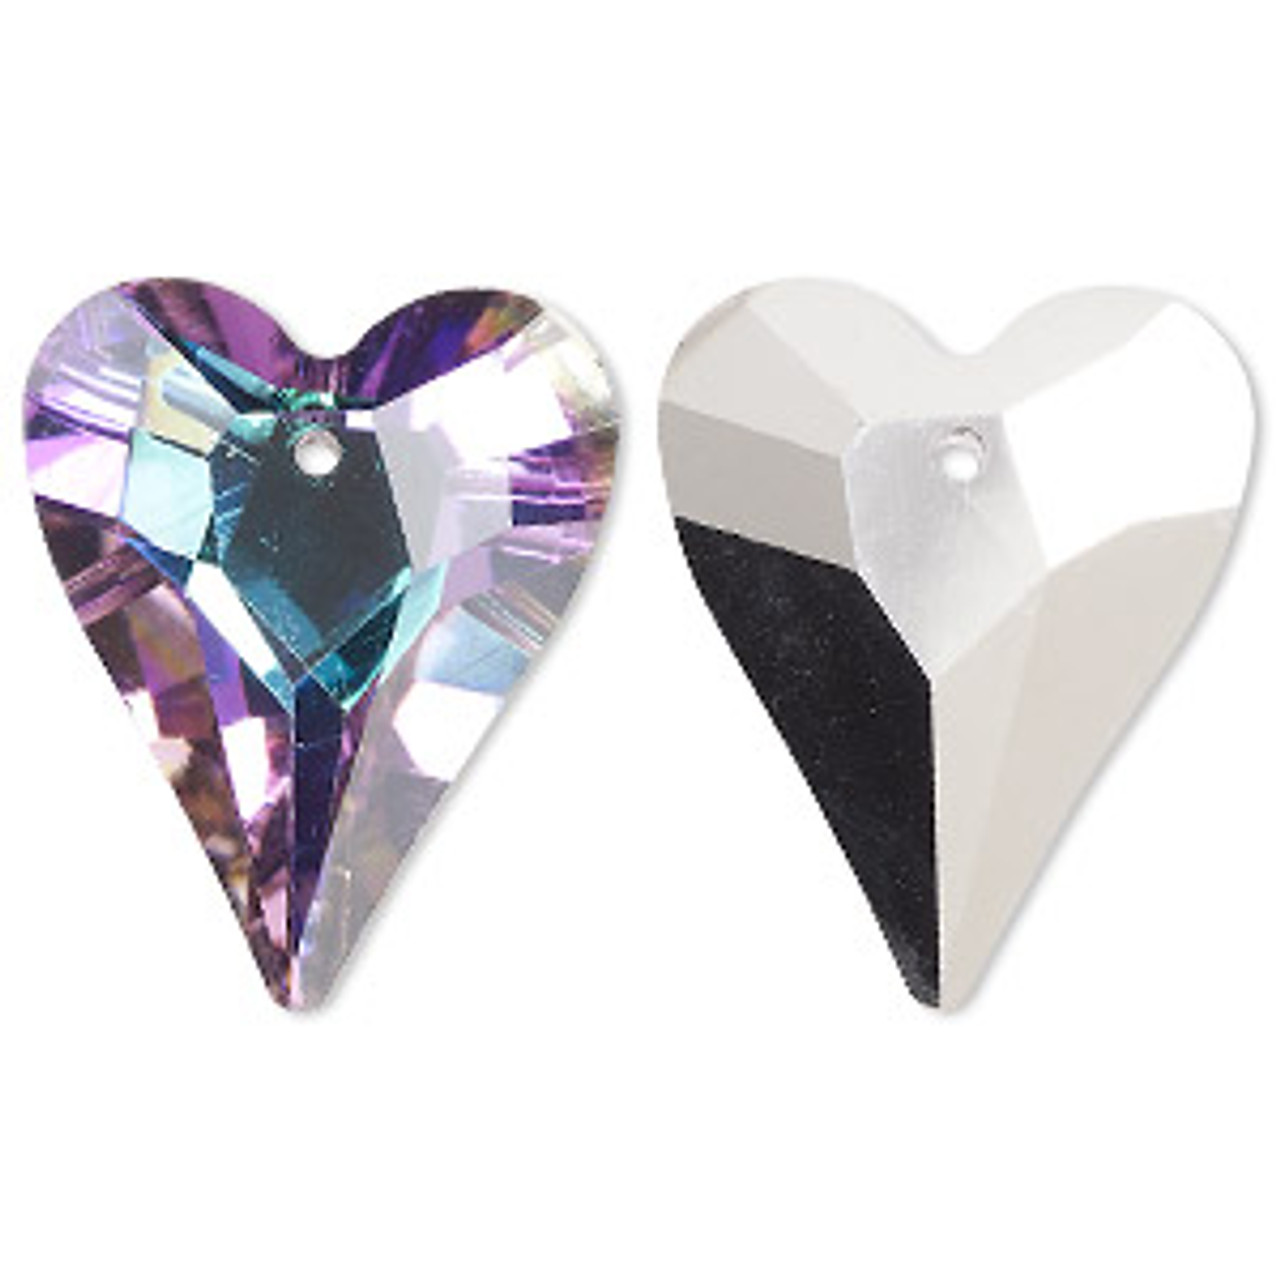 27x22mm Vitrail Light Crystal Heart (1 Piece)